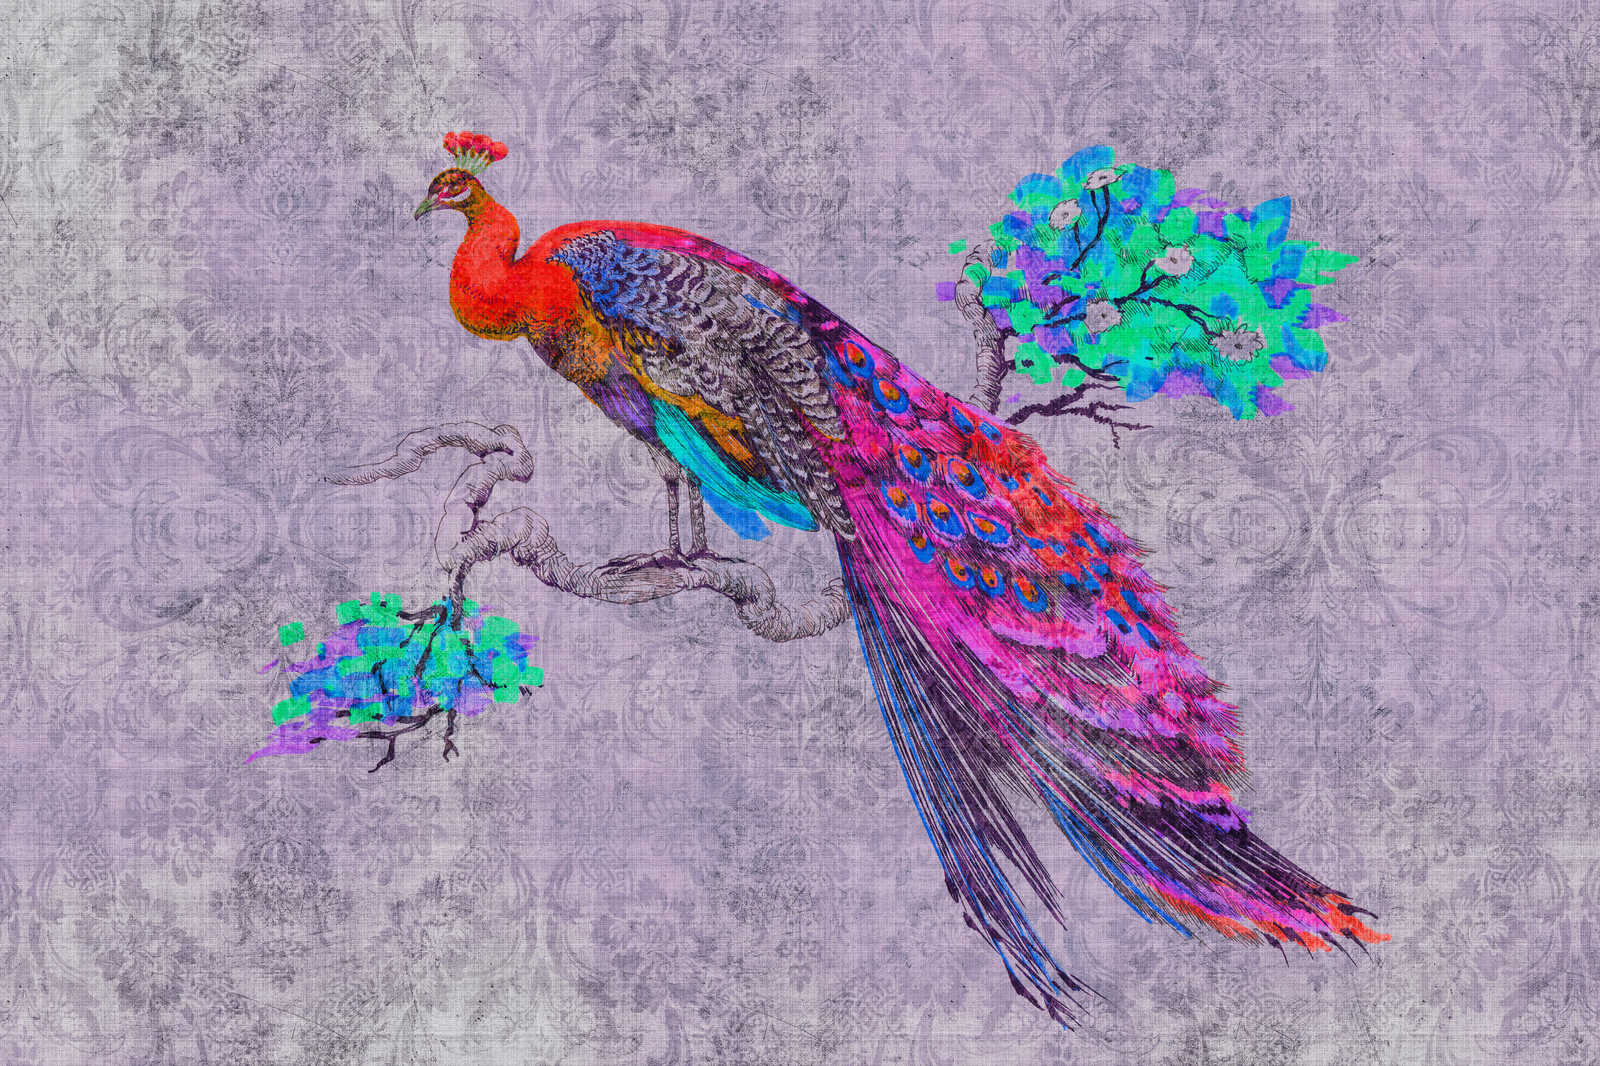             Peacock 3 - Leinwandbild mit farbenprächtigem Pfau - Naturleinen Struktur – 0,90 m x 0,60 m
        